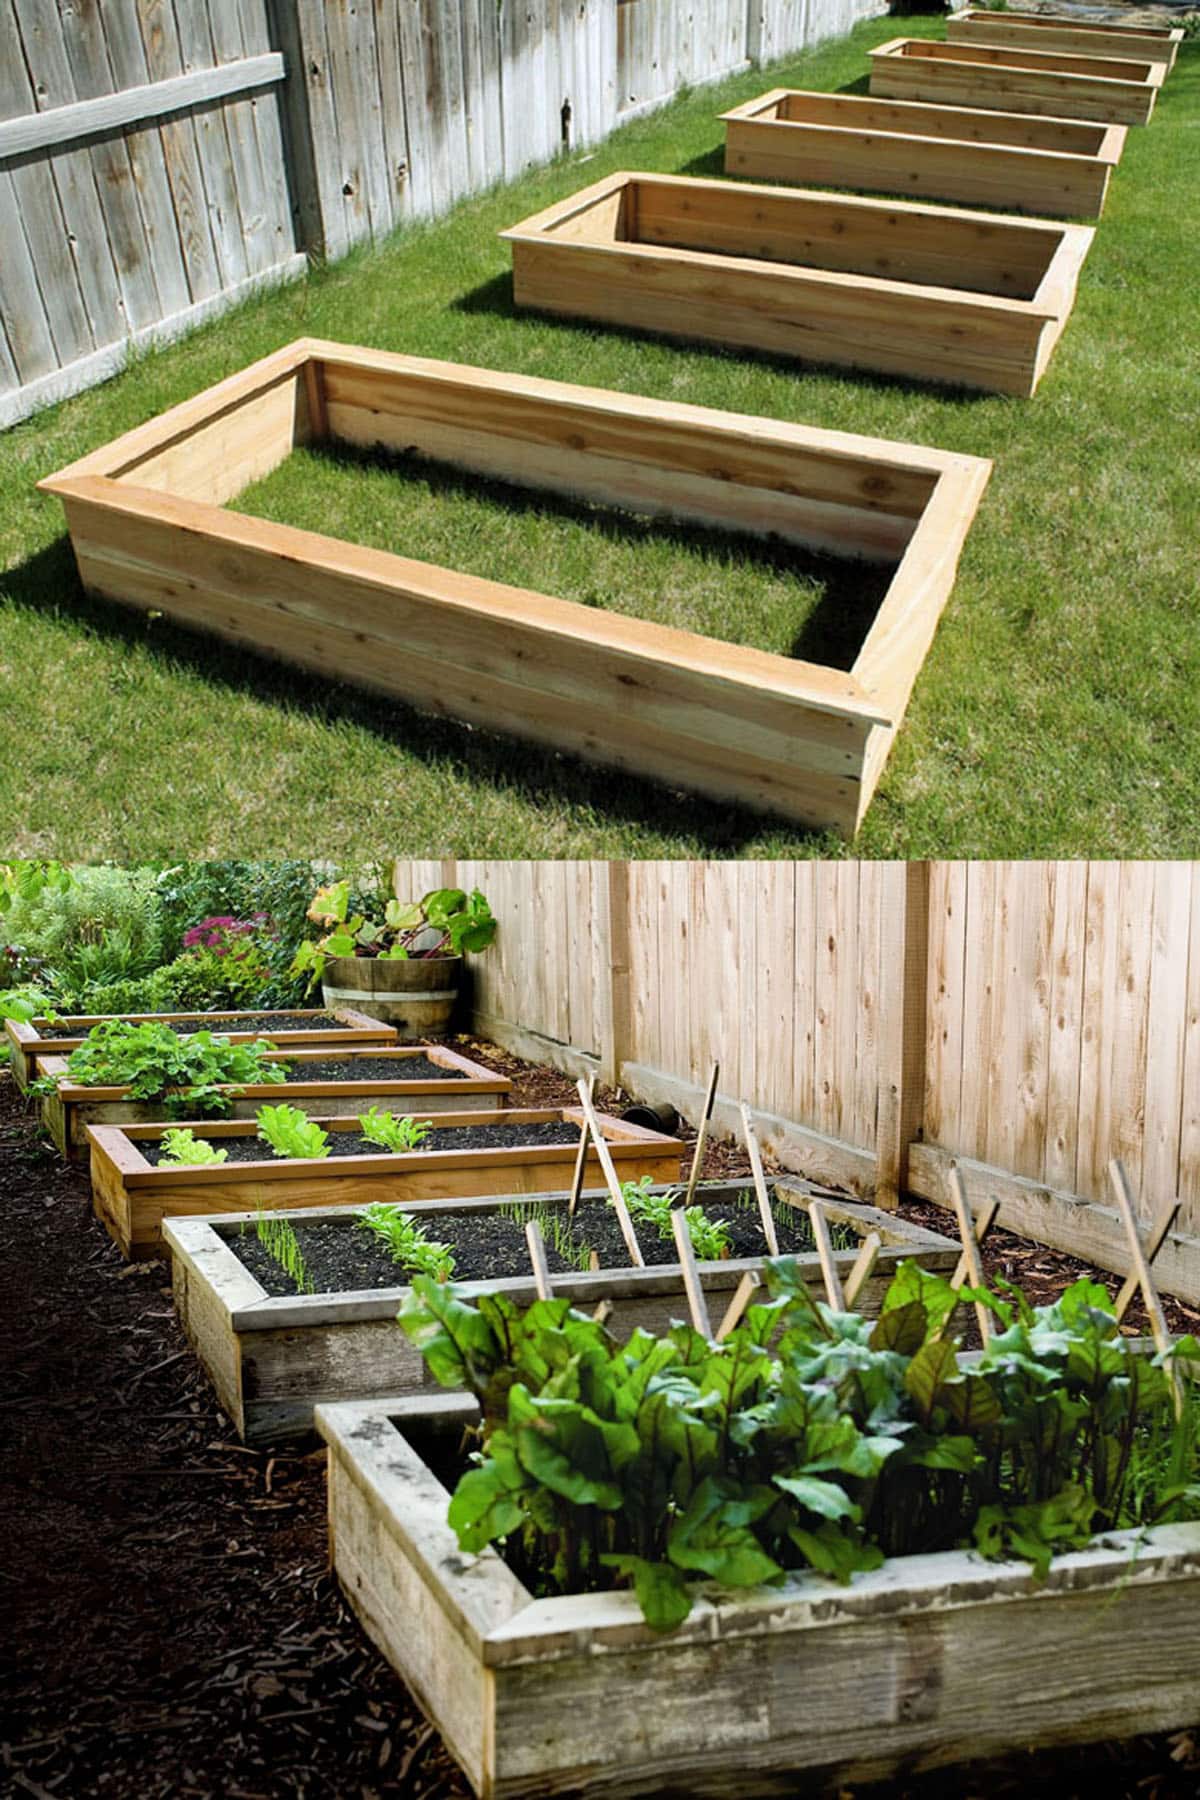 https://www.apieceofrainbow.com/wp-content/uploads/2022/01/diy-raised-bed-gardens-ideas-designs-build-garden-boxes-planters-elevated-beds-wood-pallets-cinder-block-flowers-vegetable-gardening-apieceofrainbow-7.jpg